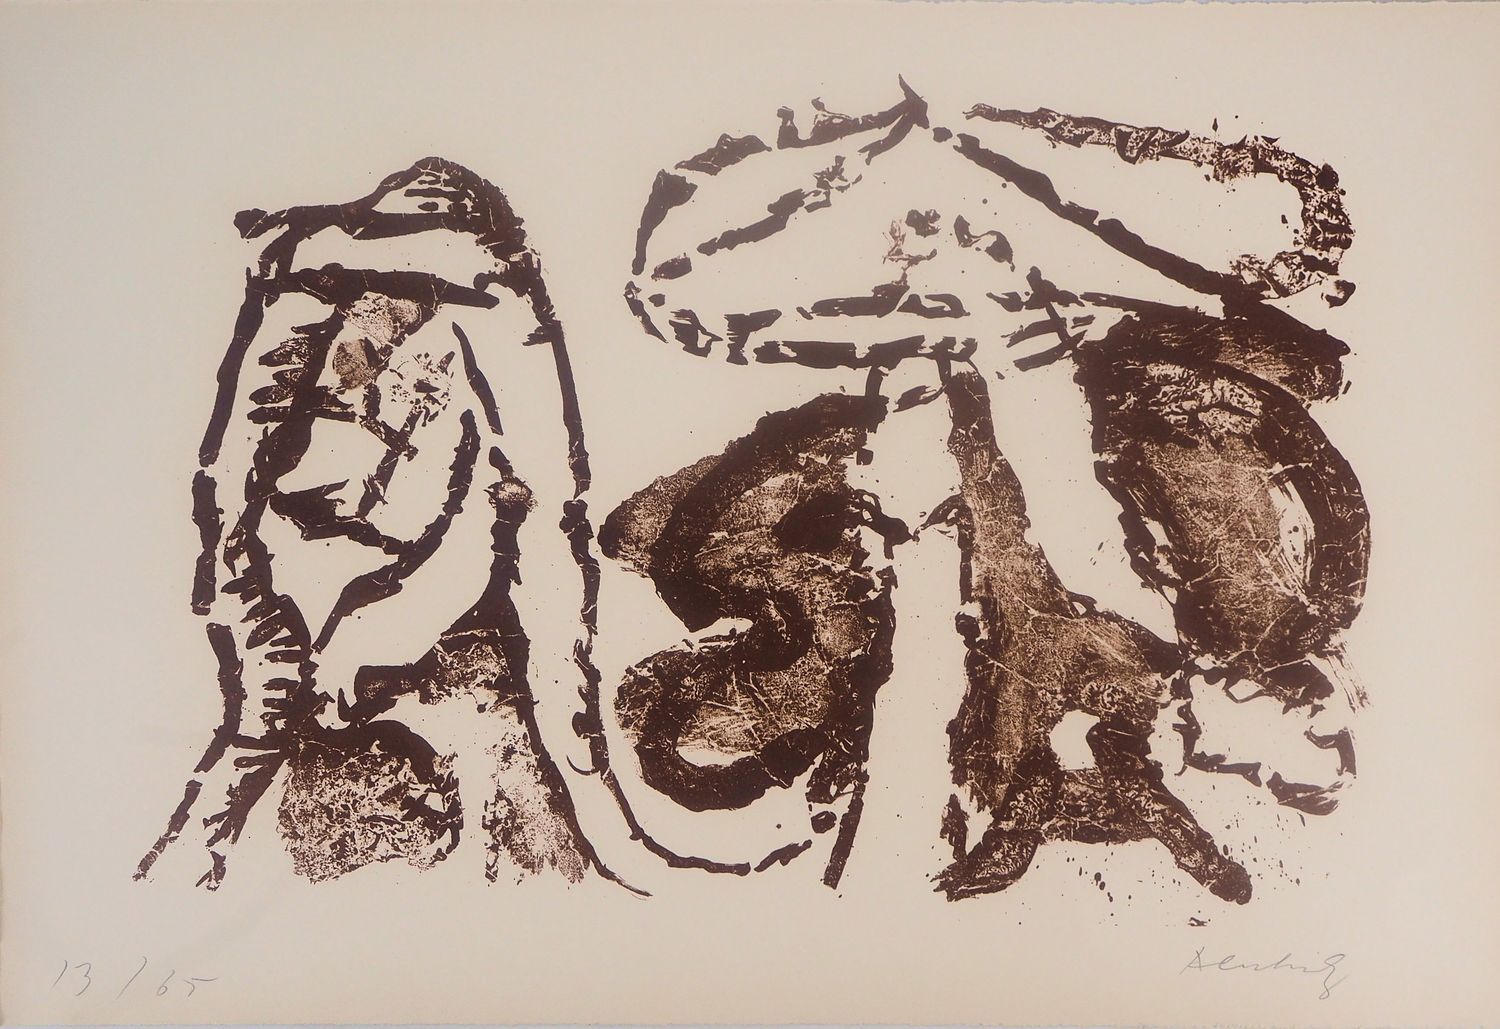 Pierre ALECHINSKY Pierre Alechinsky

对话, 1960年

原始石版画

铅笔签名的艺术家

编号为/65份

在BFK R&hellip;